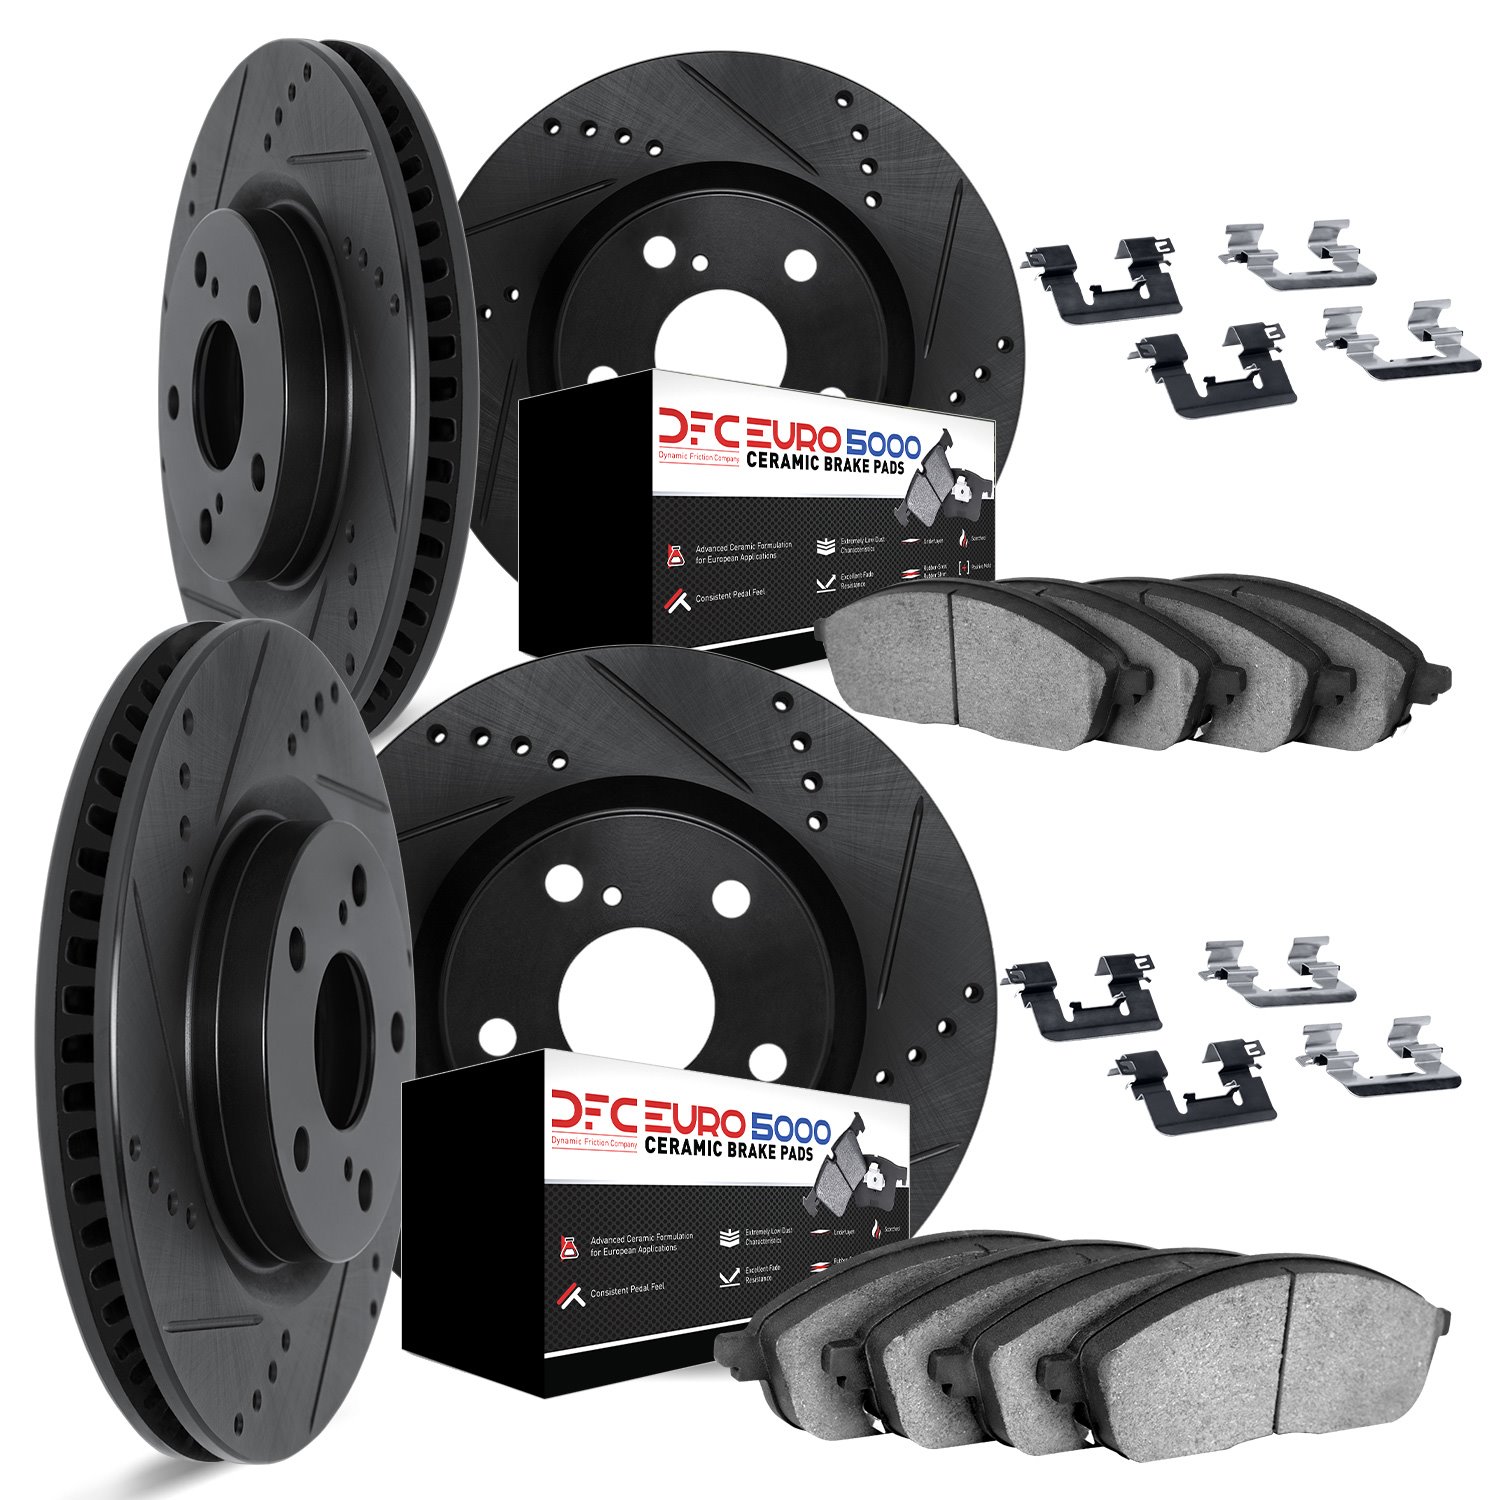 8614-46001 Drilled/Slotted Brake Rotors w/5000 Euro Ceramic Brake Pads Kit & Hardware [Black], 2009-2015 GM, Position: Front and